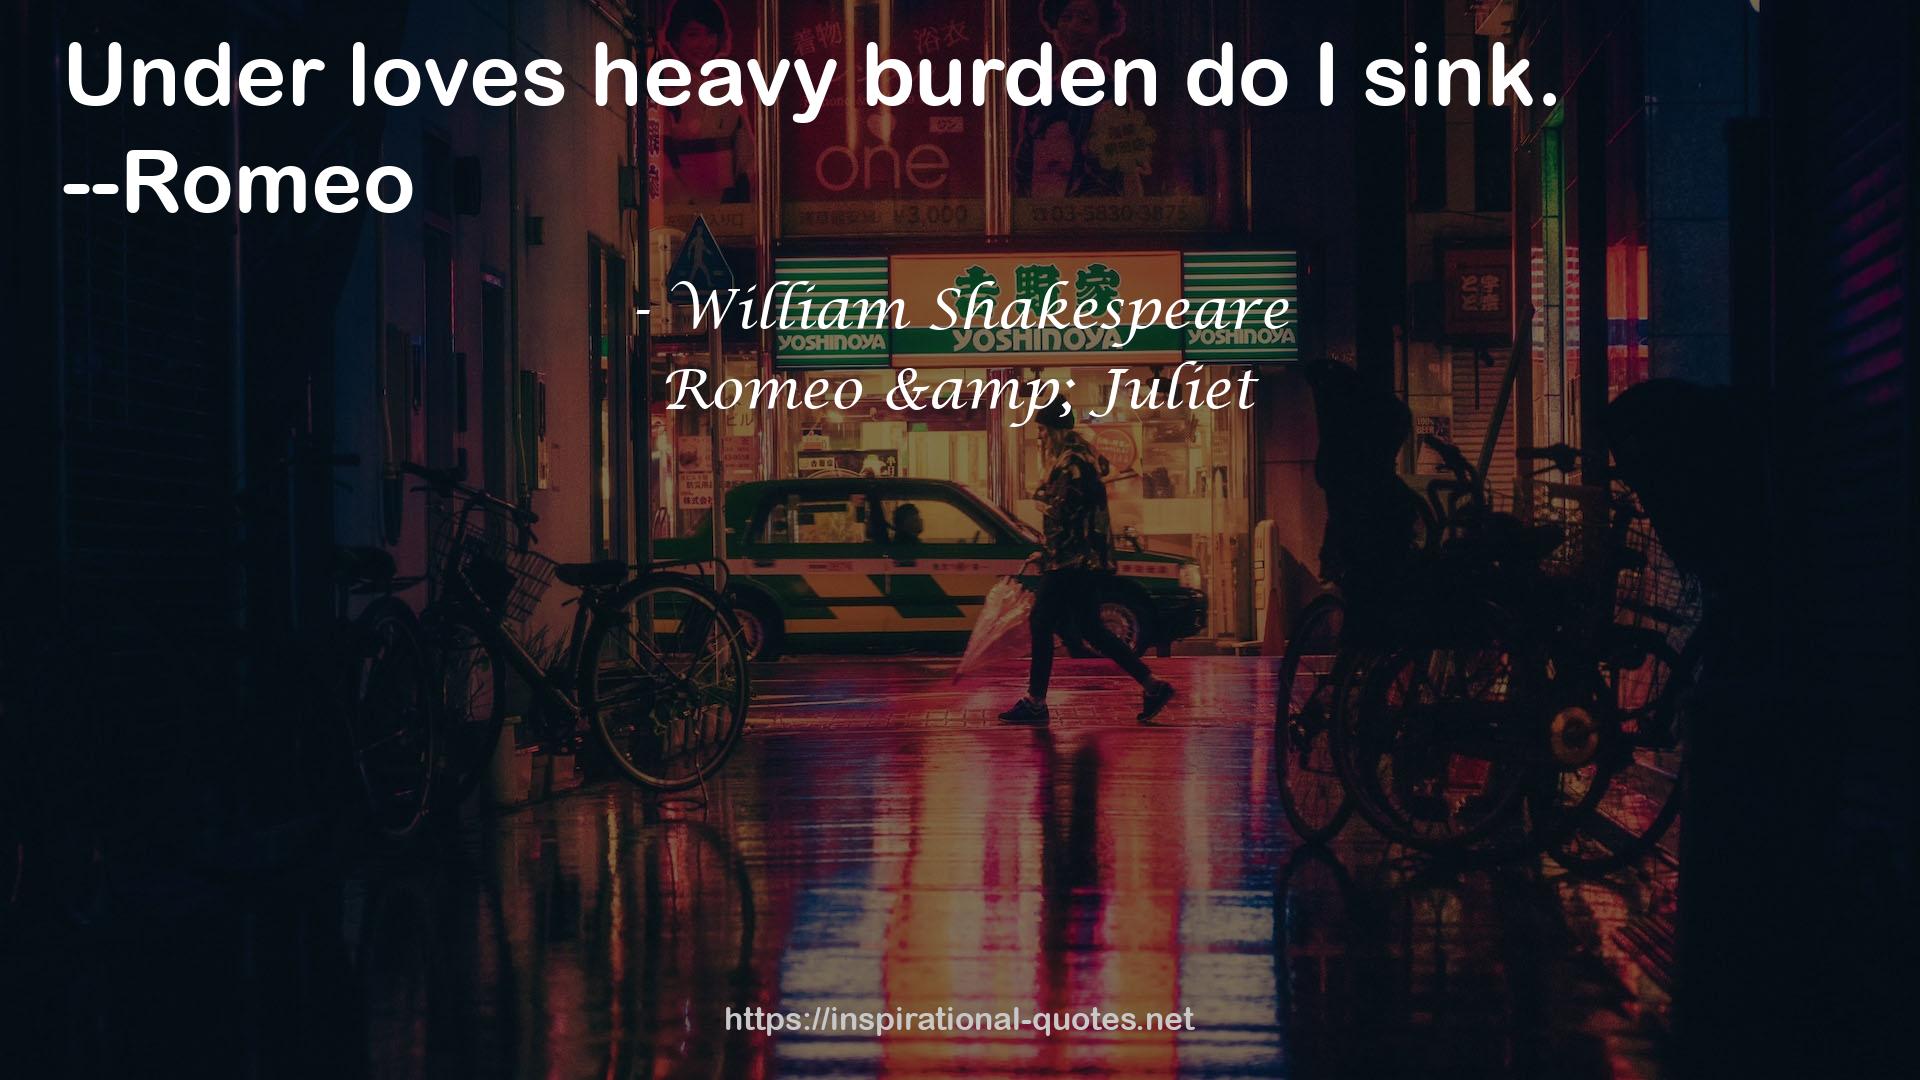 Romeo & Juliet QUOTES